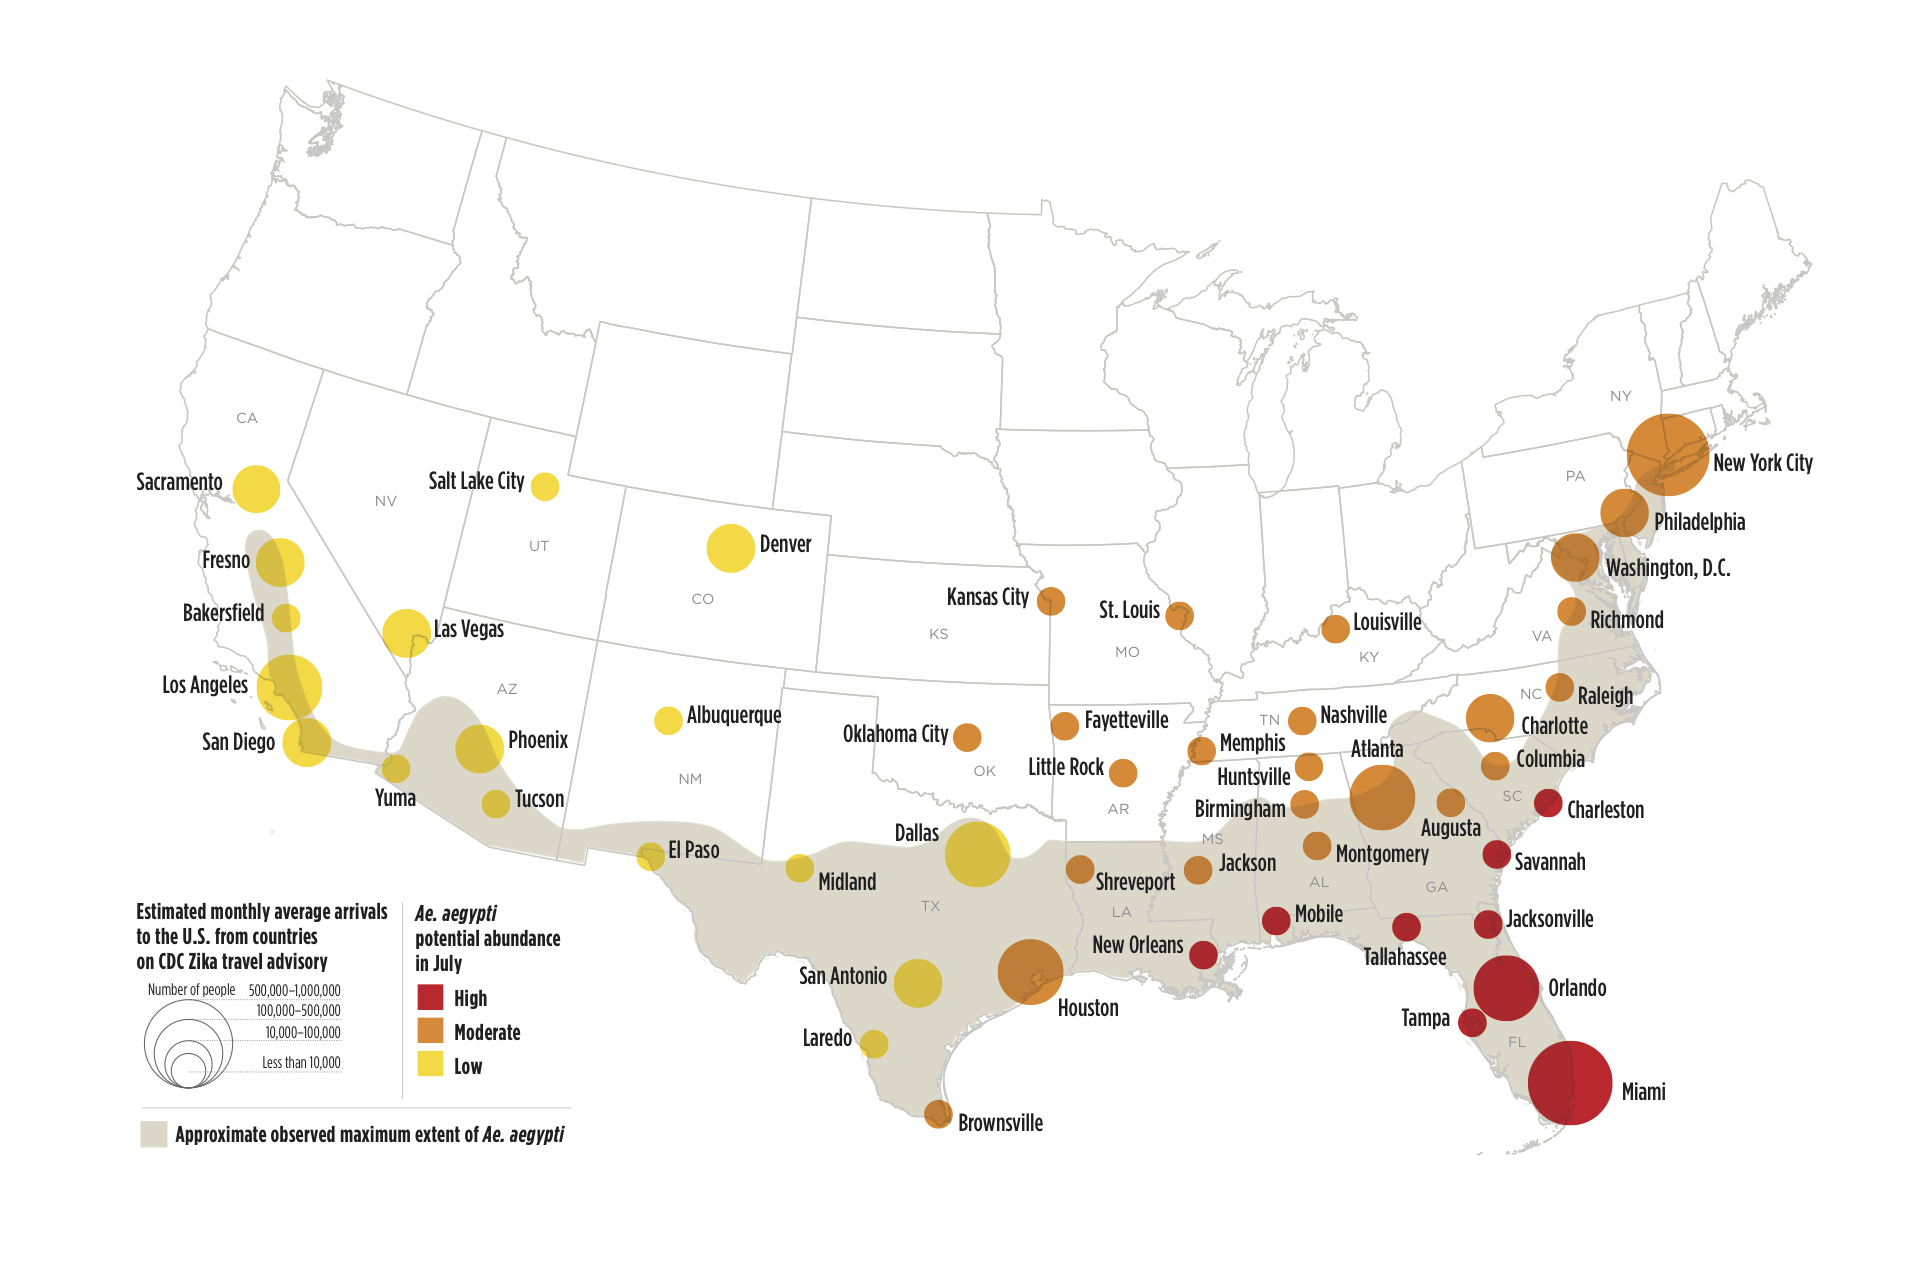 Ziki risk in US: map of risk in 50 cities